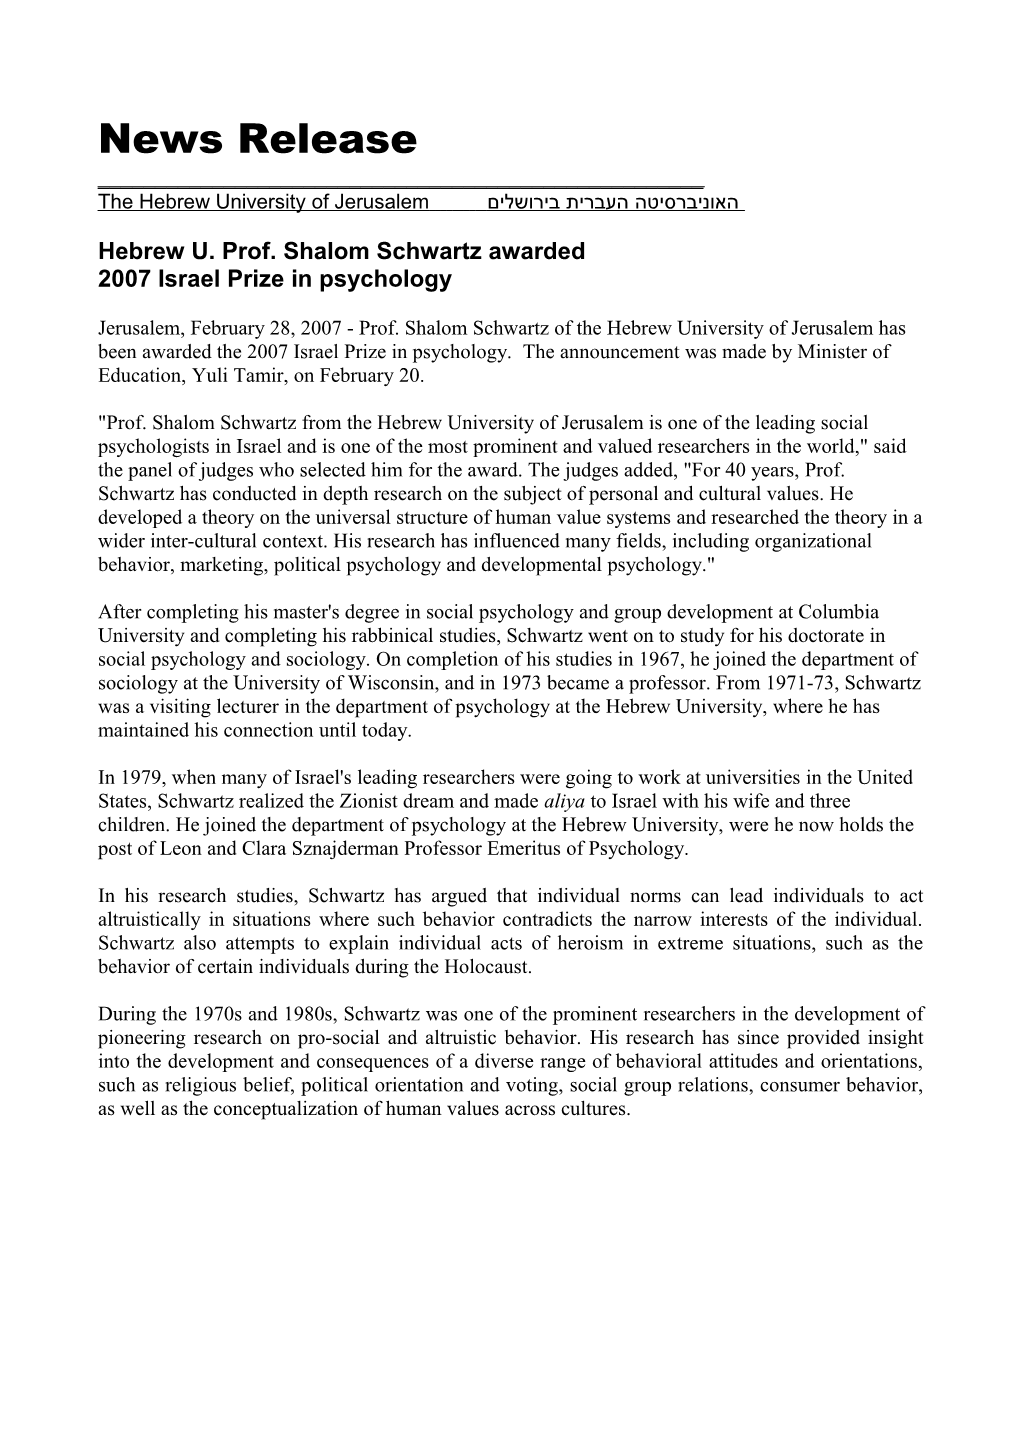 Hebrew U. Prof. Shalom Schwartz Awarded